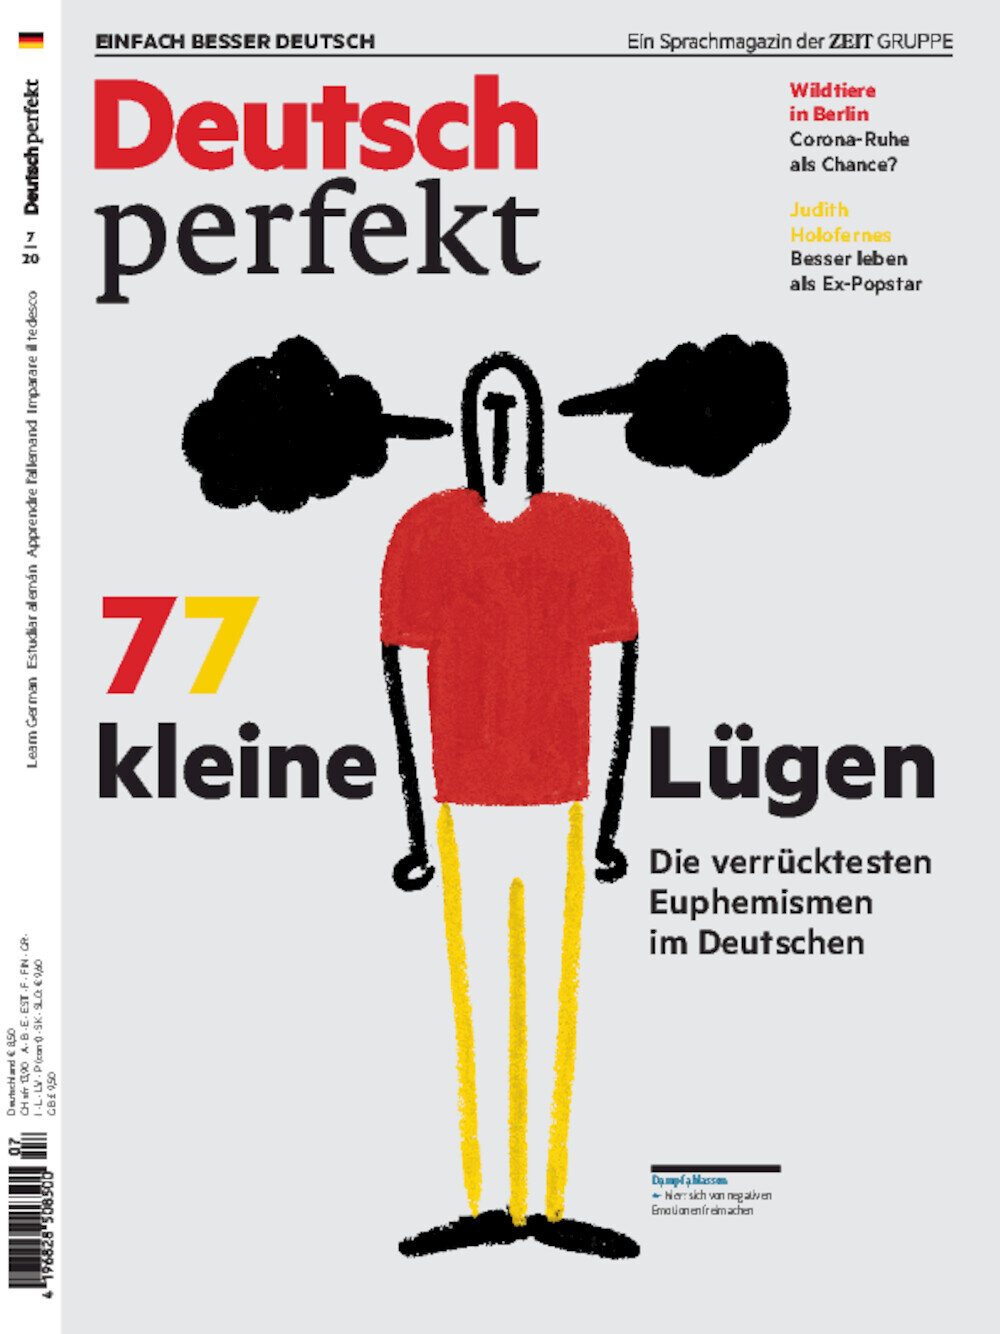 Deutsch perfekt ePaper 07/2020